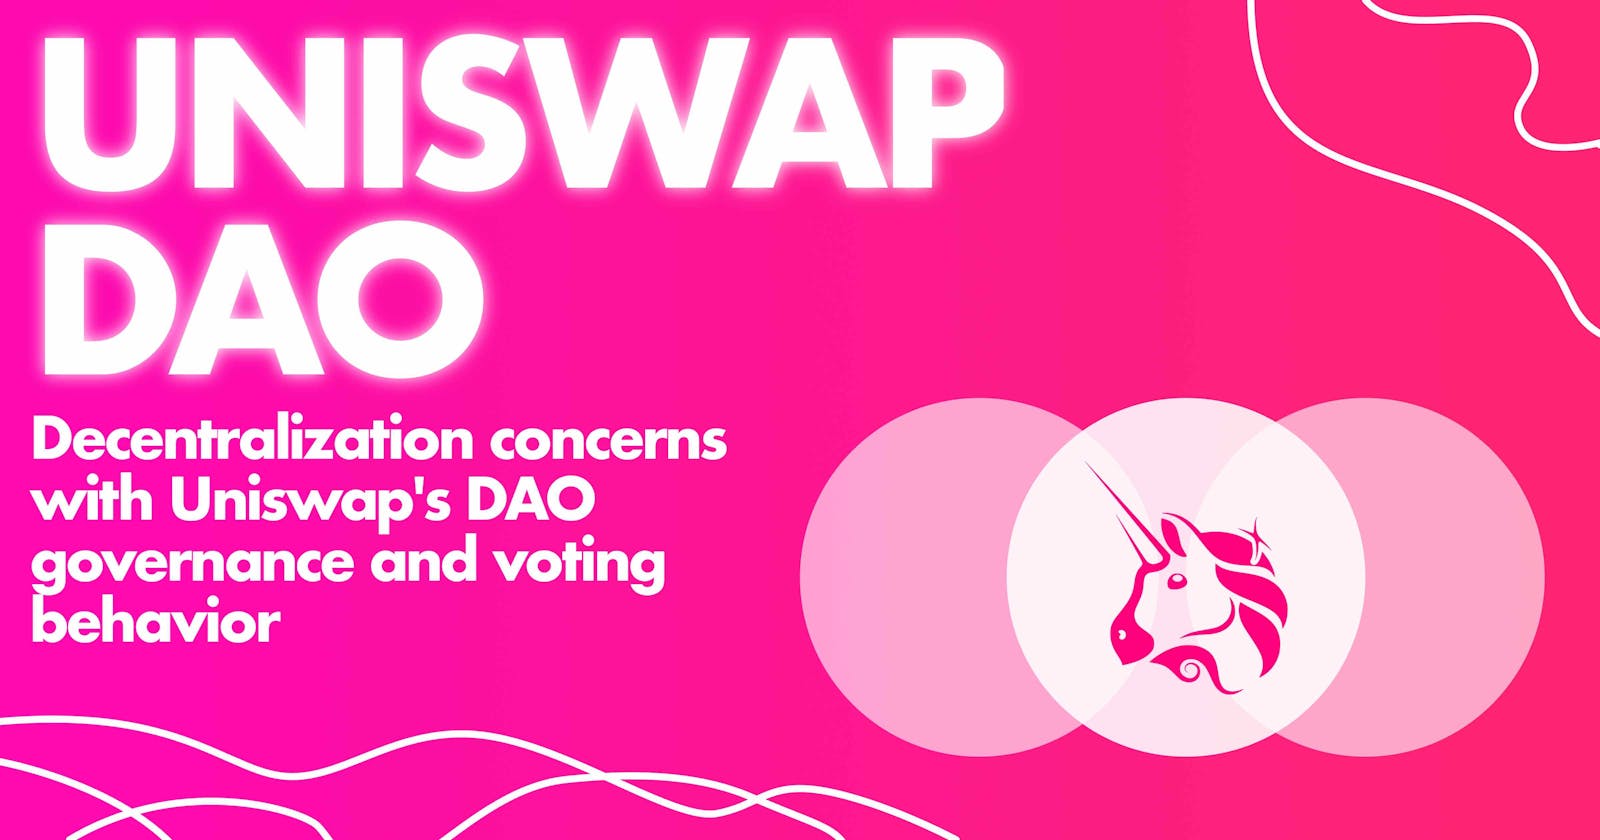 Decentralization concerns with Uniswap's DAO governance and voting behavior